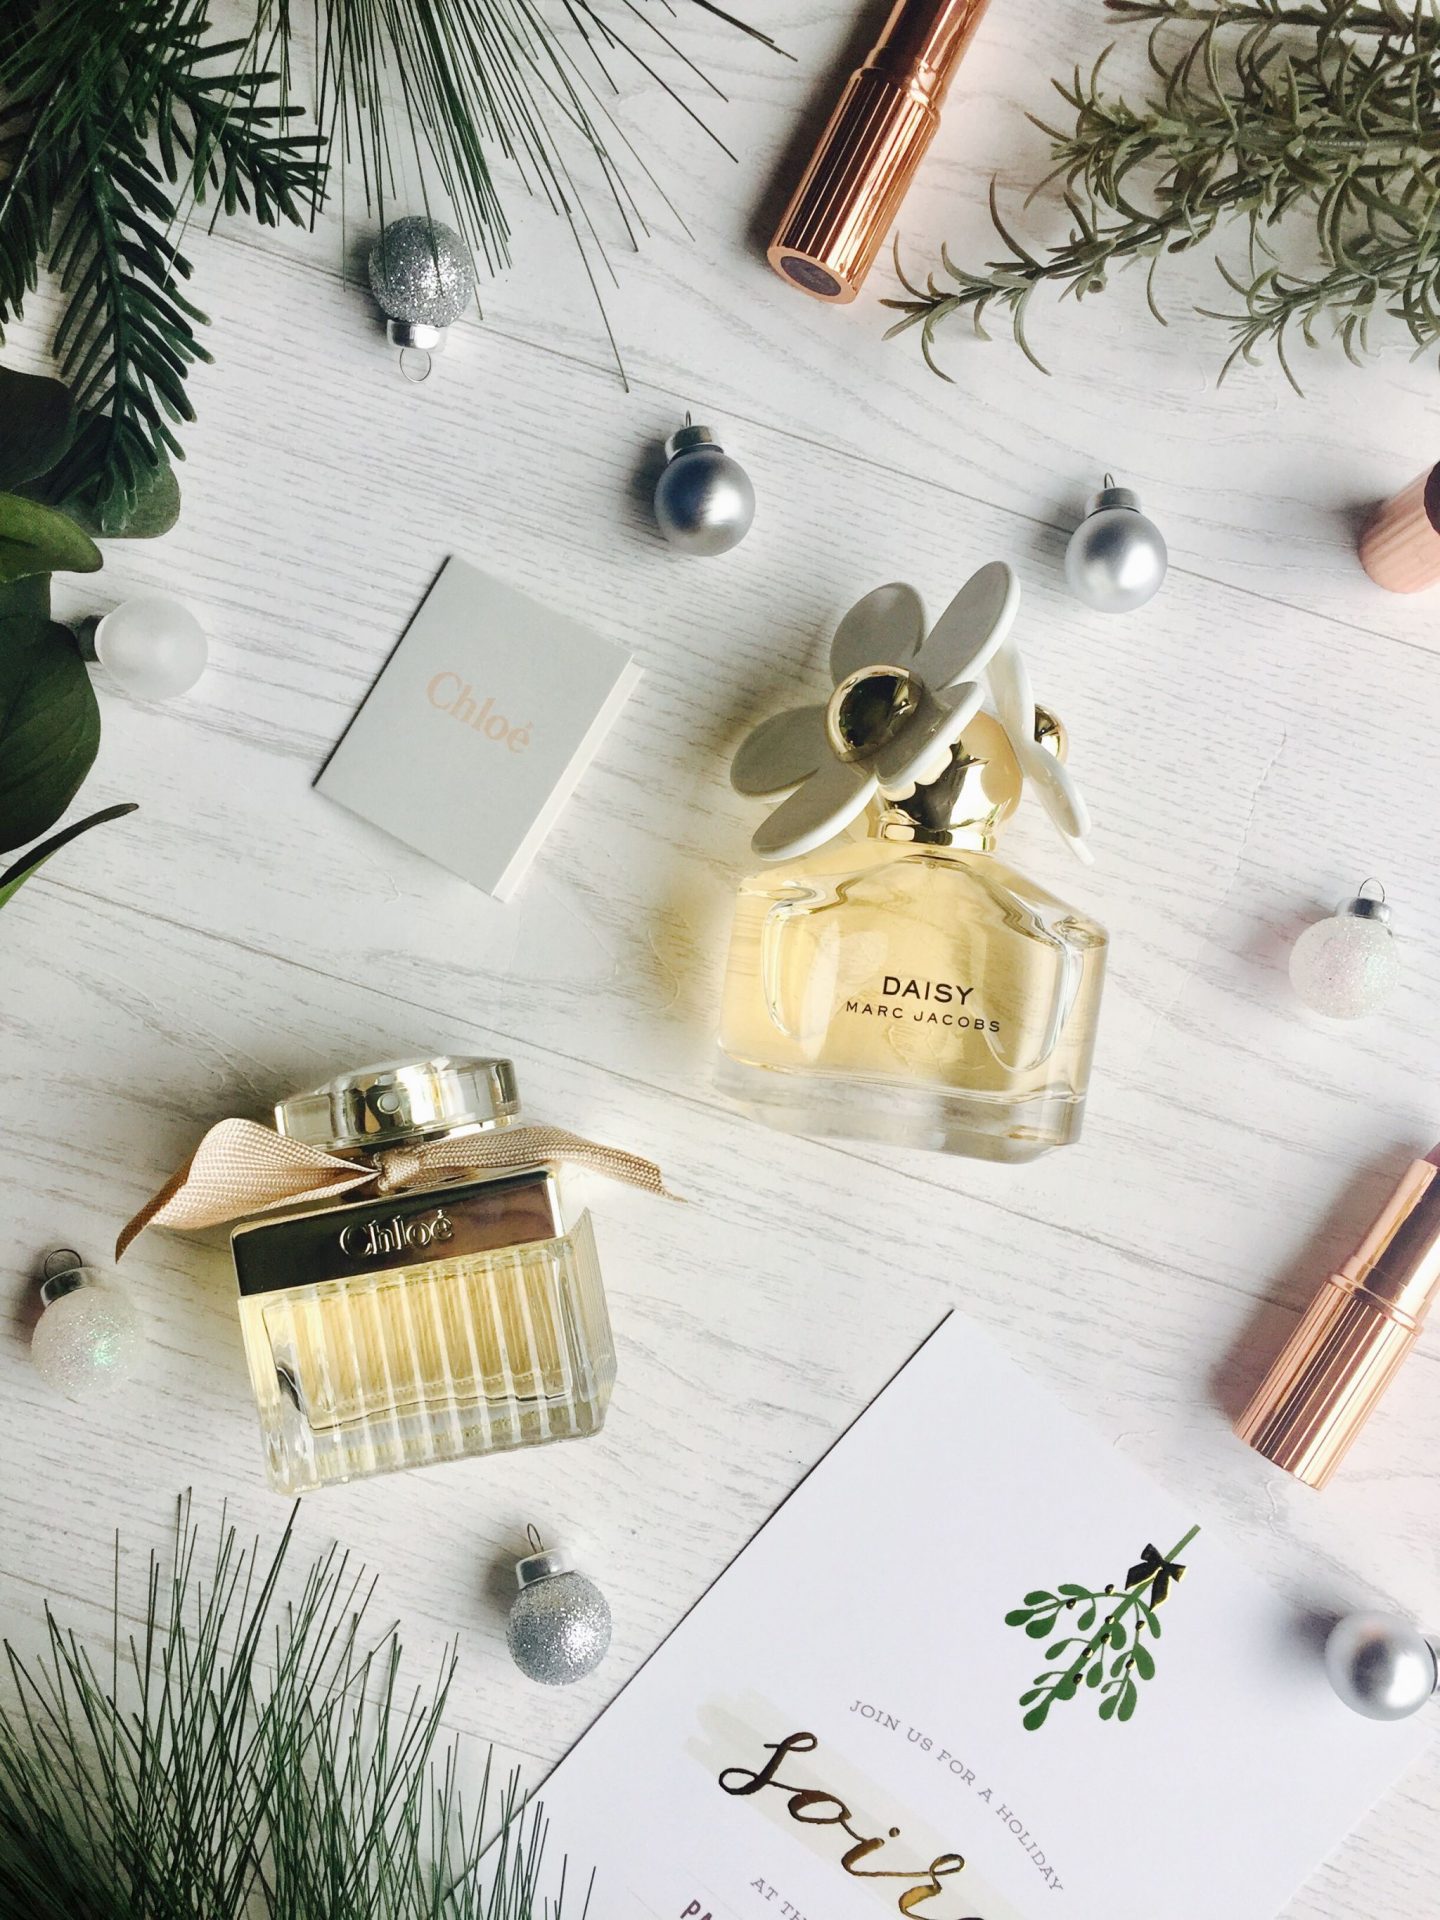 Christmas Gifting Week Fragrance Direct Marc Jacobs Chloe Daisy present ideas